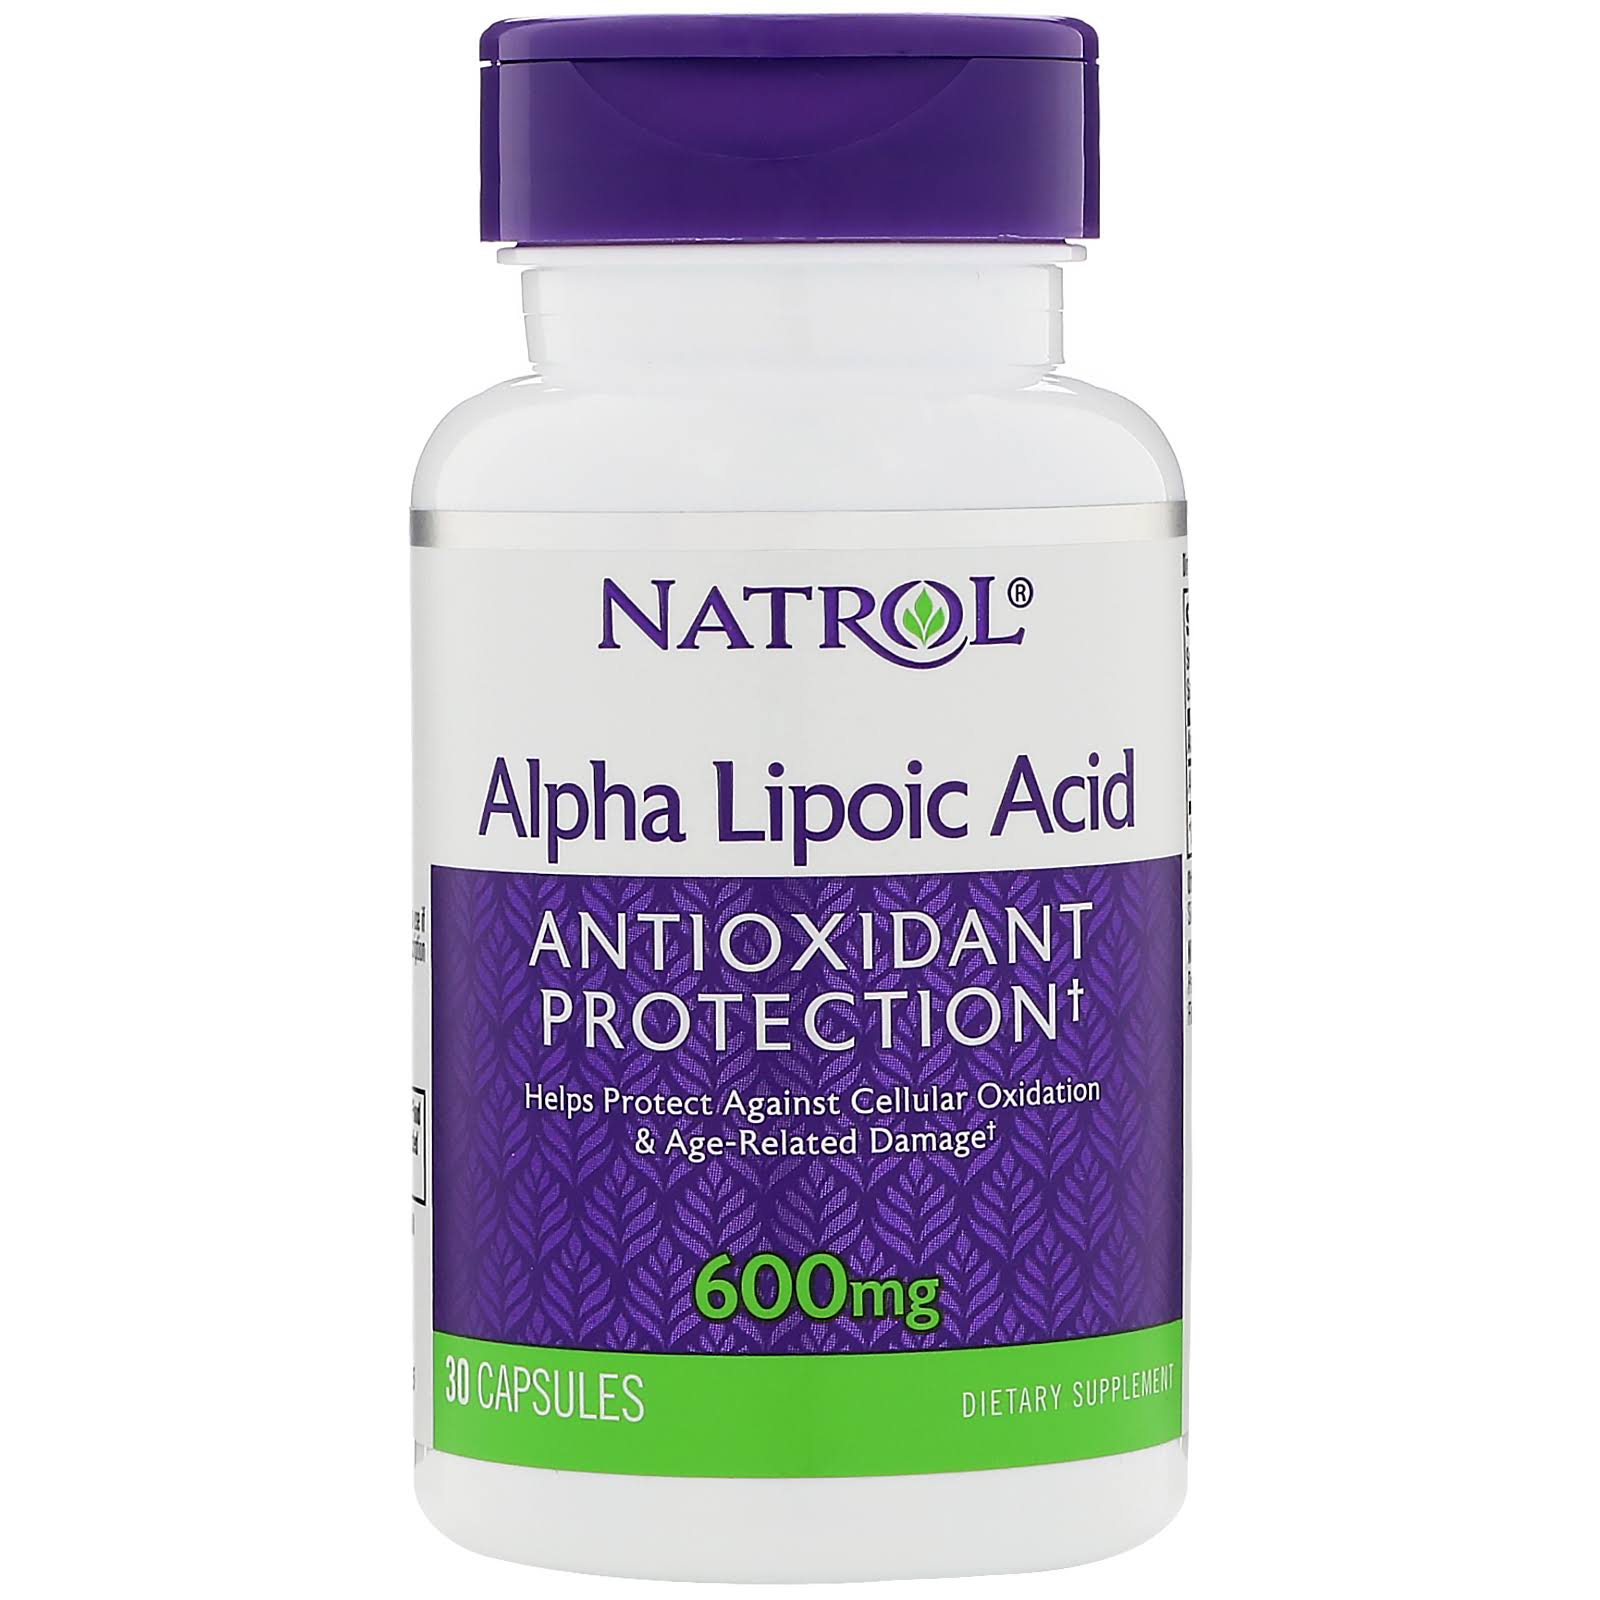 Natrol Alpha Lipoic Acid - 600mg, x30 capsules